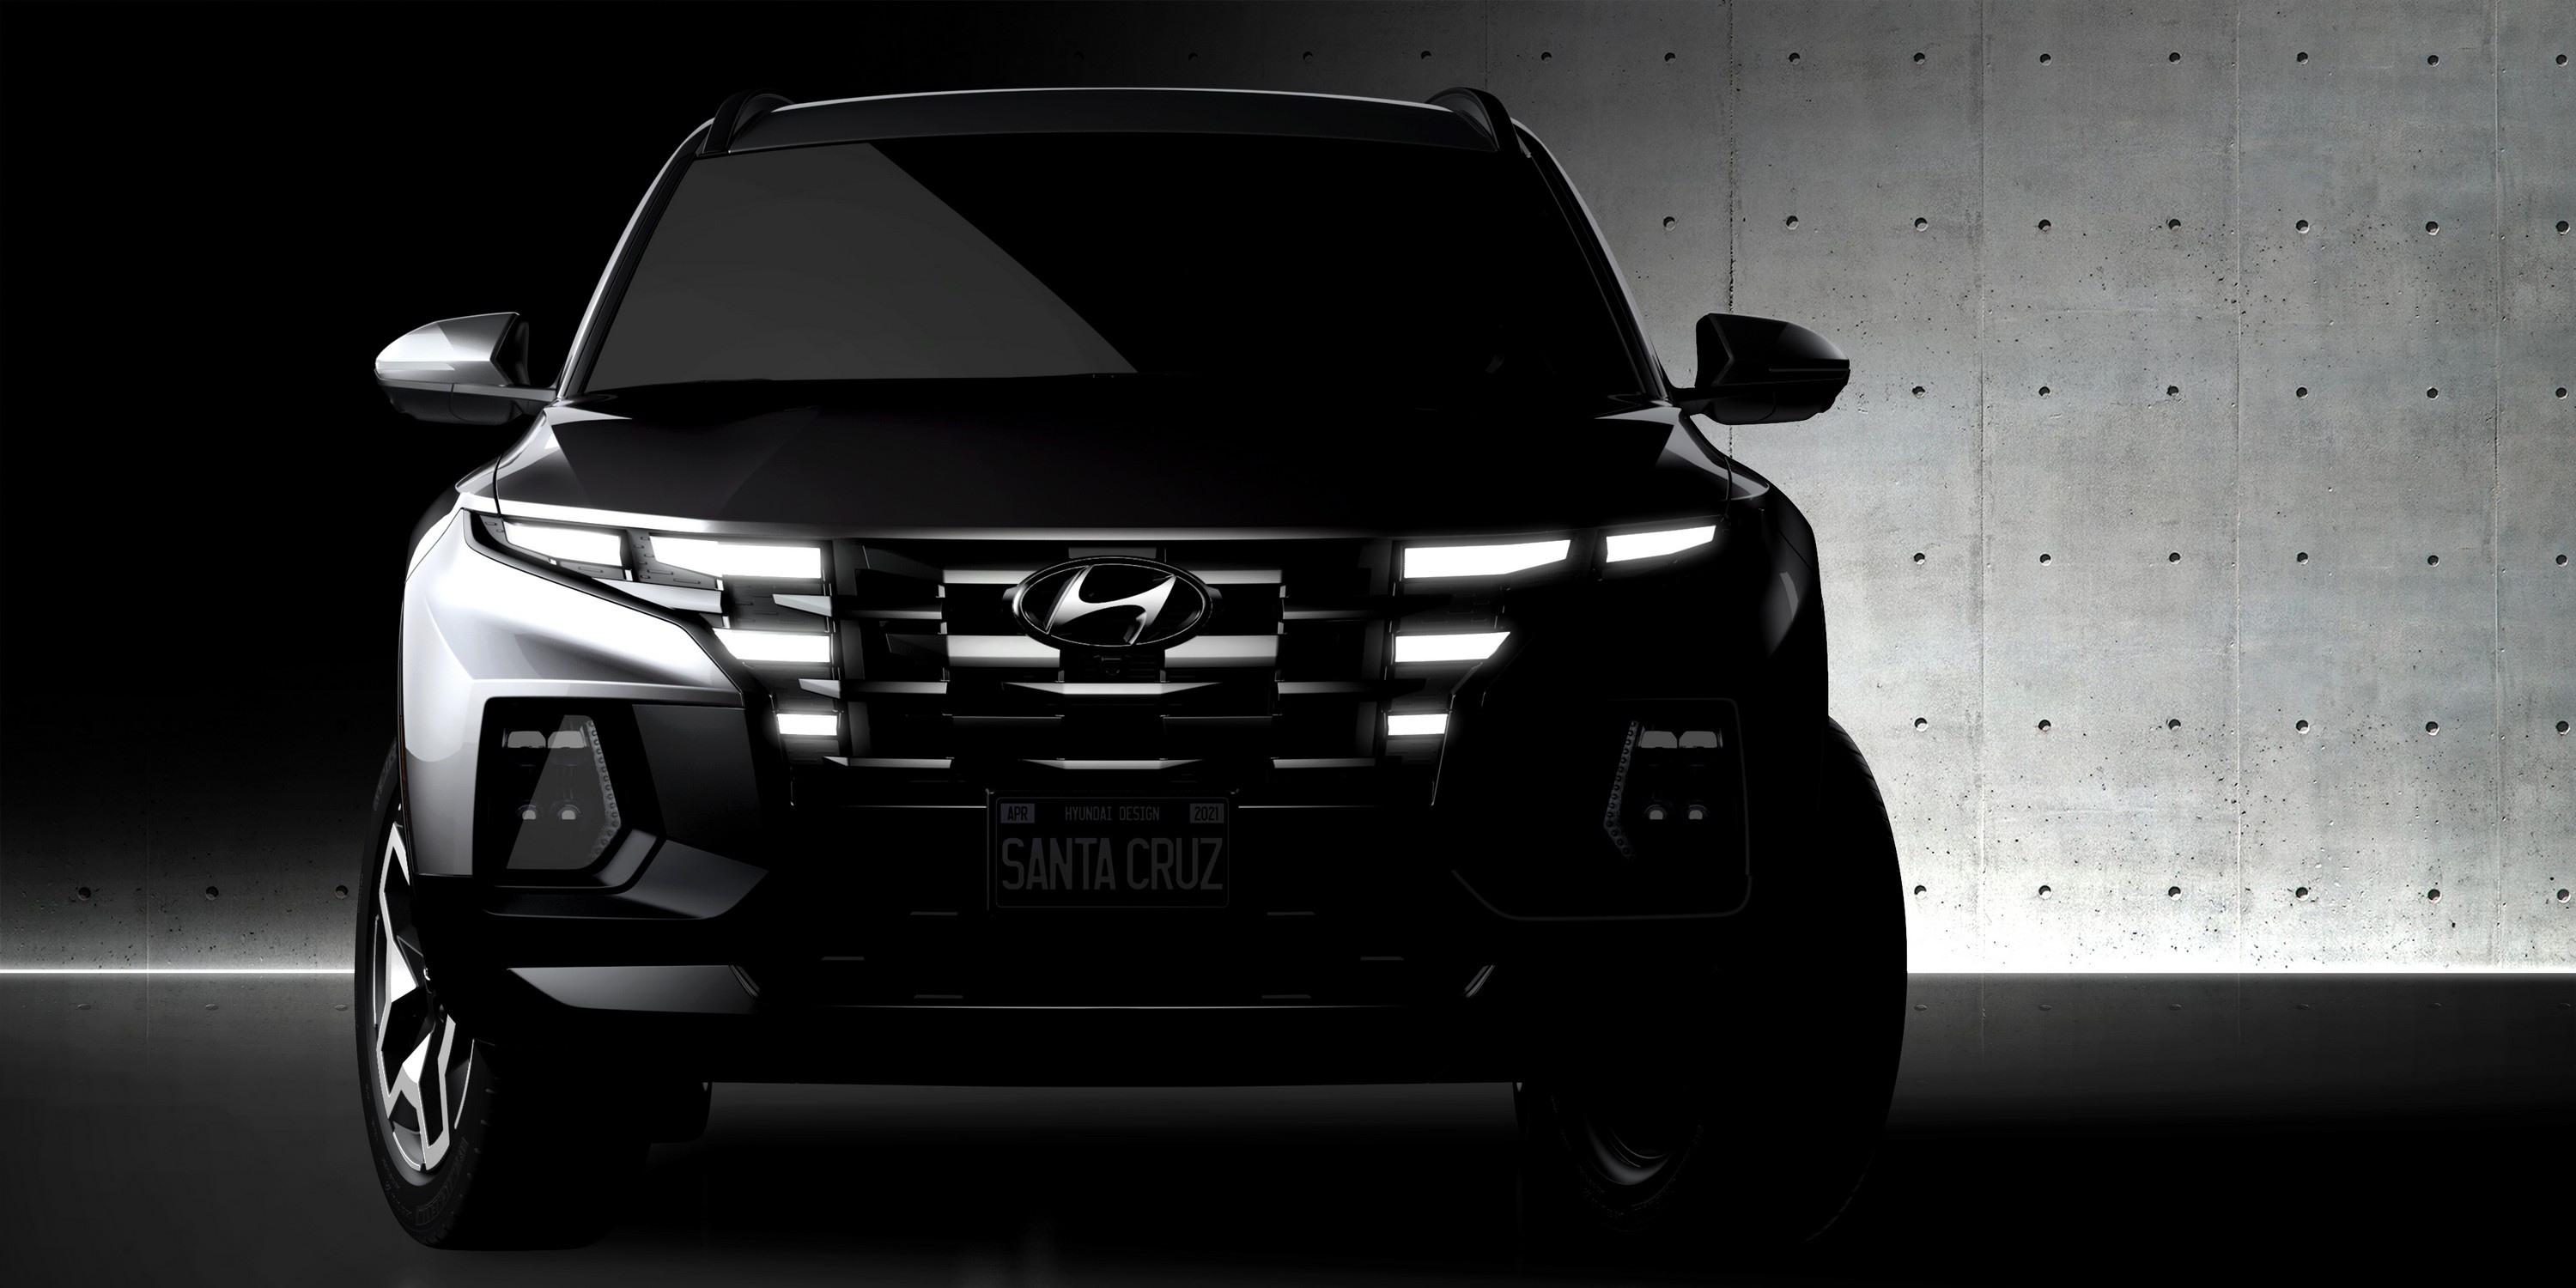 Hyundai Santa Cruz, Upcoming pickup truck, Highly anticipated, Innovative features, 3000x1500 Dual Screen Desktop